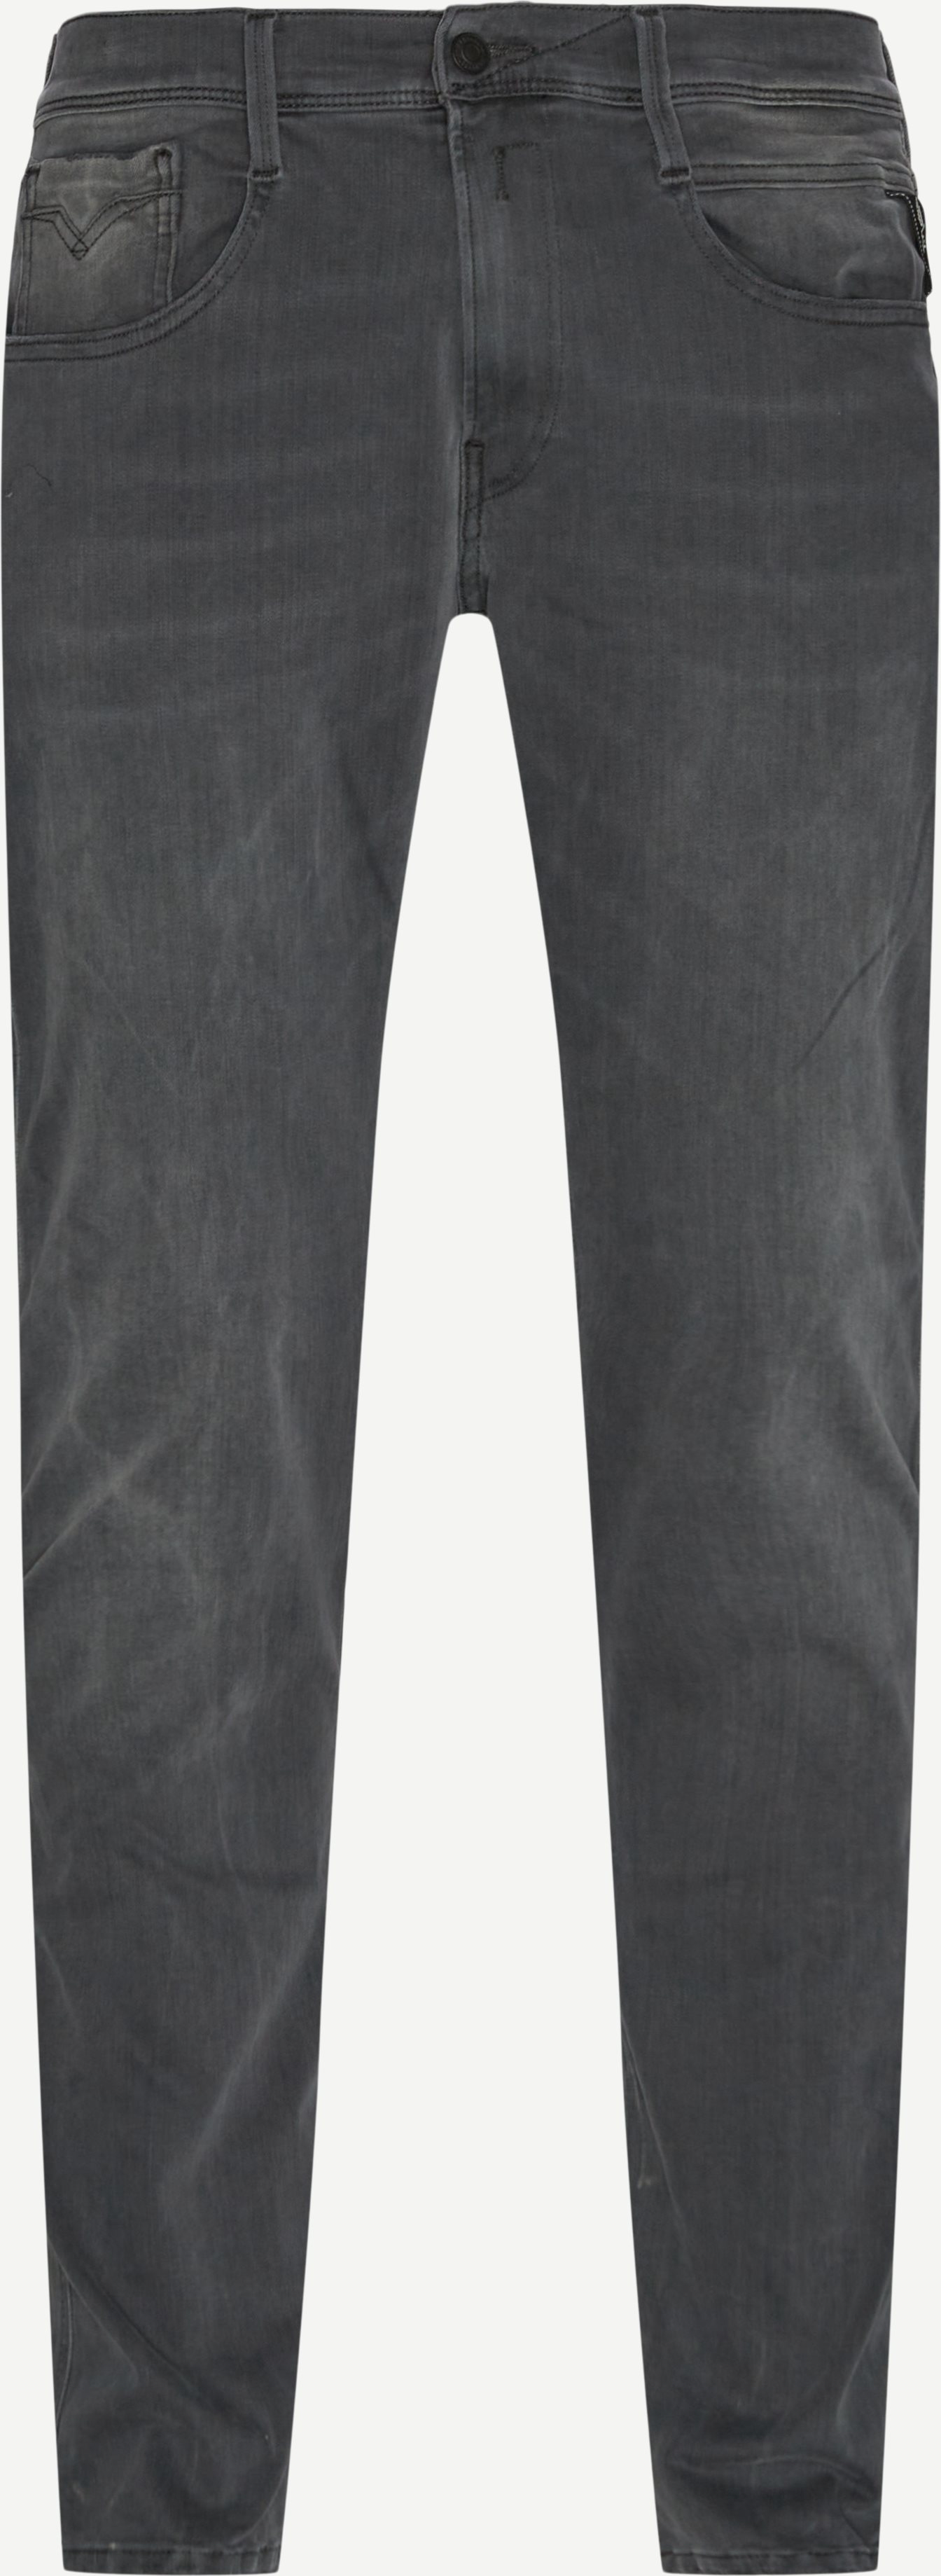 661 RB08 Anbass Hyperflex Jeans - Jeans - Slim fit - Grå